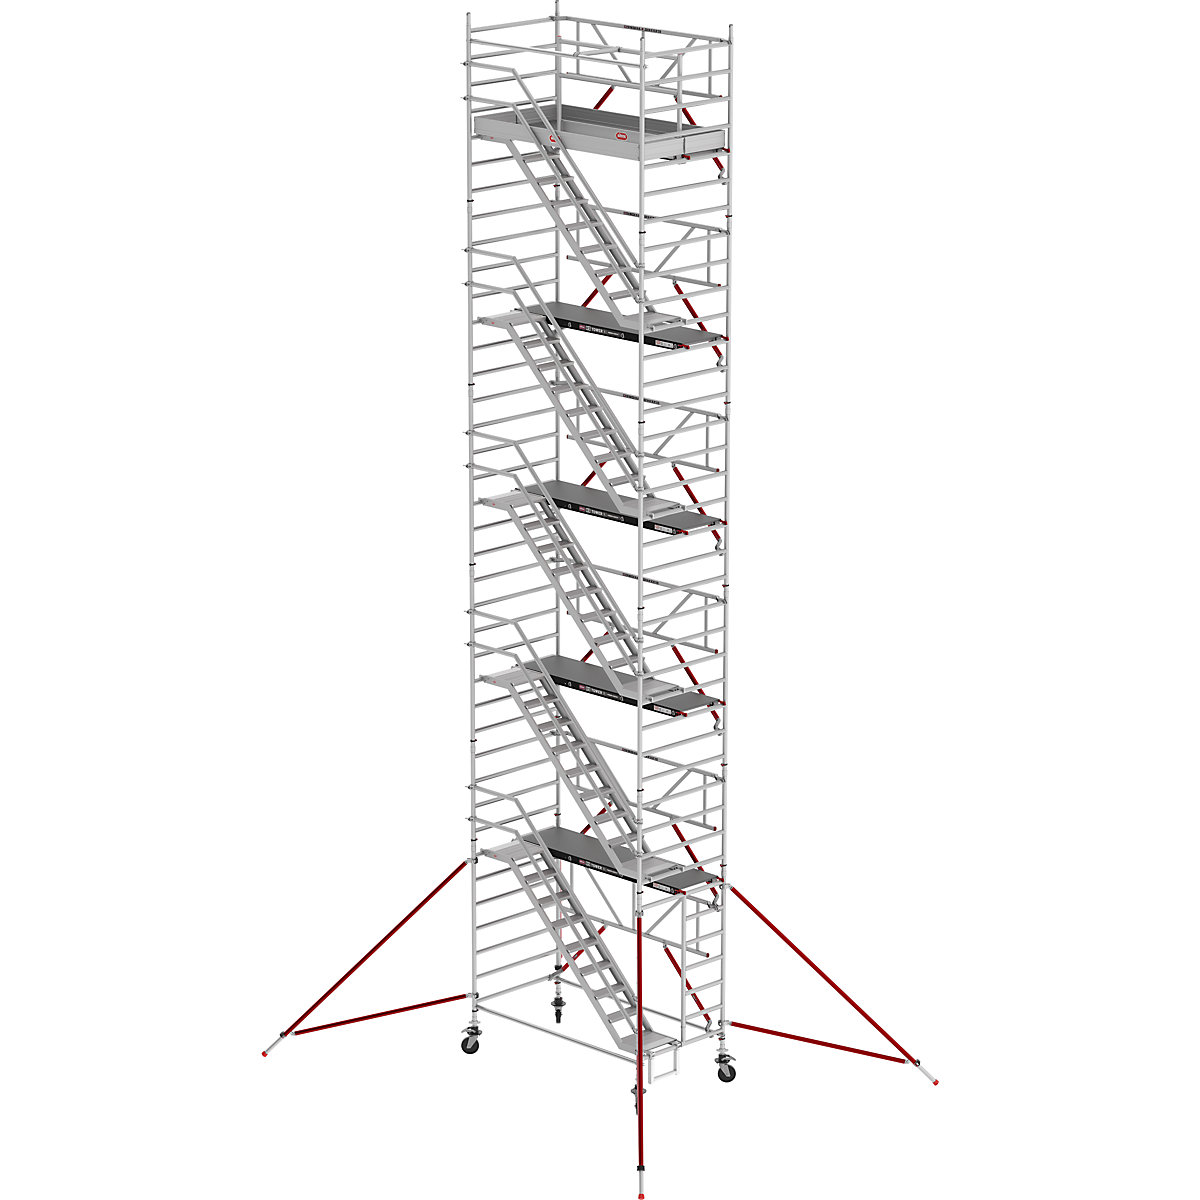 Oder s stopnicami RS TOWER 53, širok – Altrex, Fiber-Deck®, dolžina 2,45 m, delovna višina 12,20 m